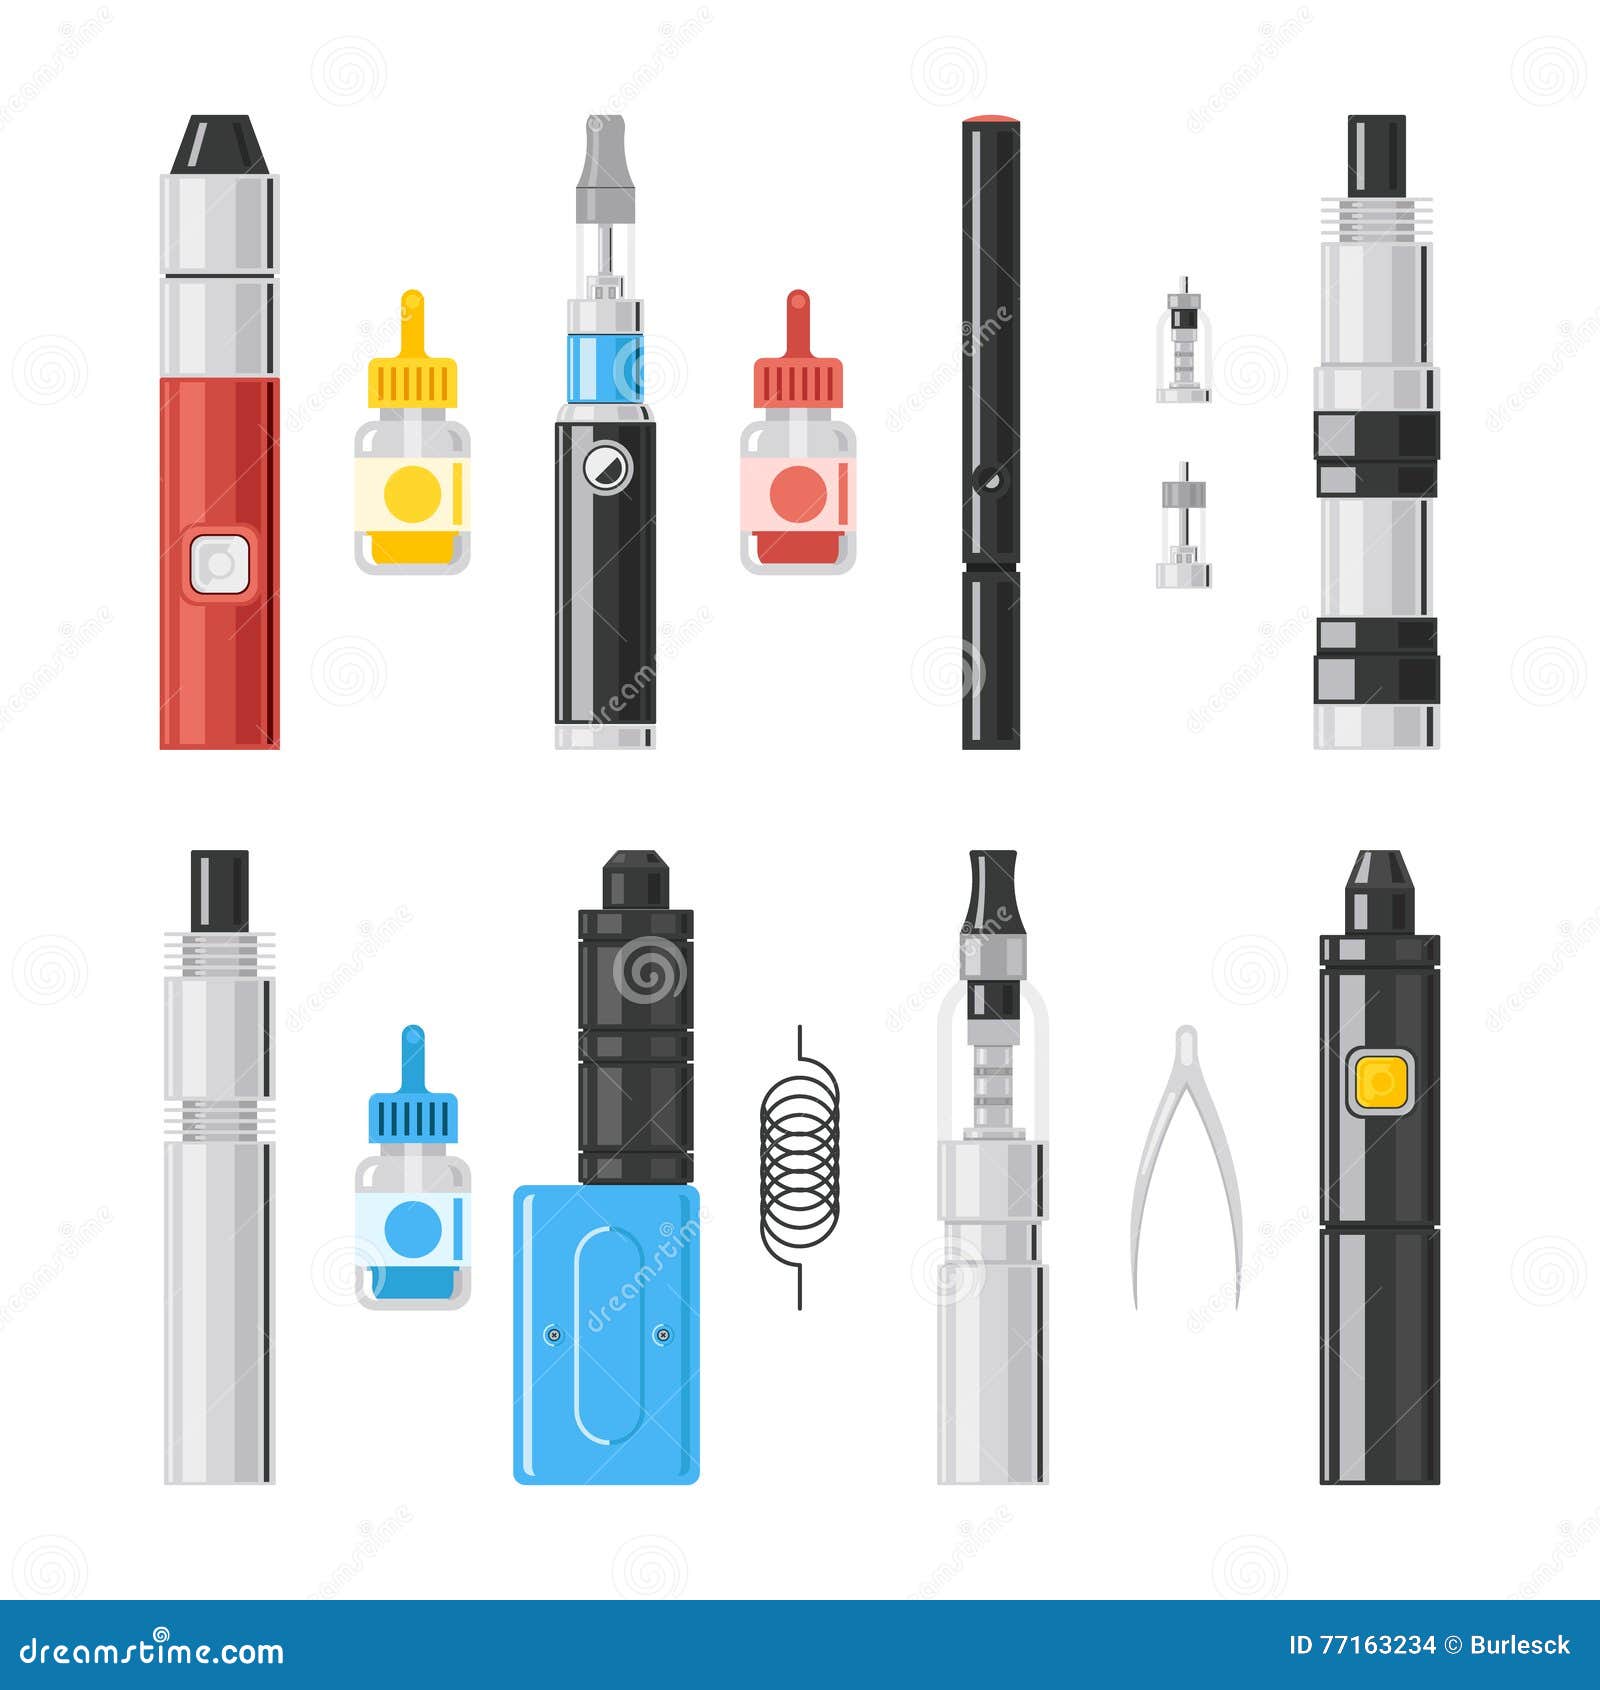 vaping flat icons. vaporizer cigarette electronic smoke signs